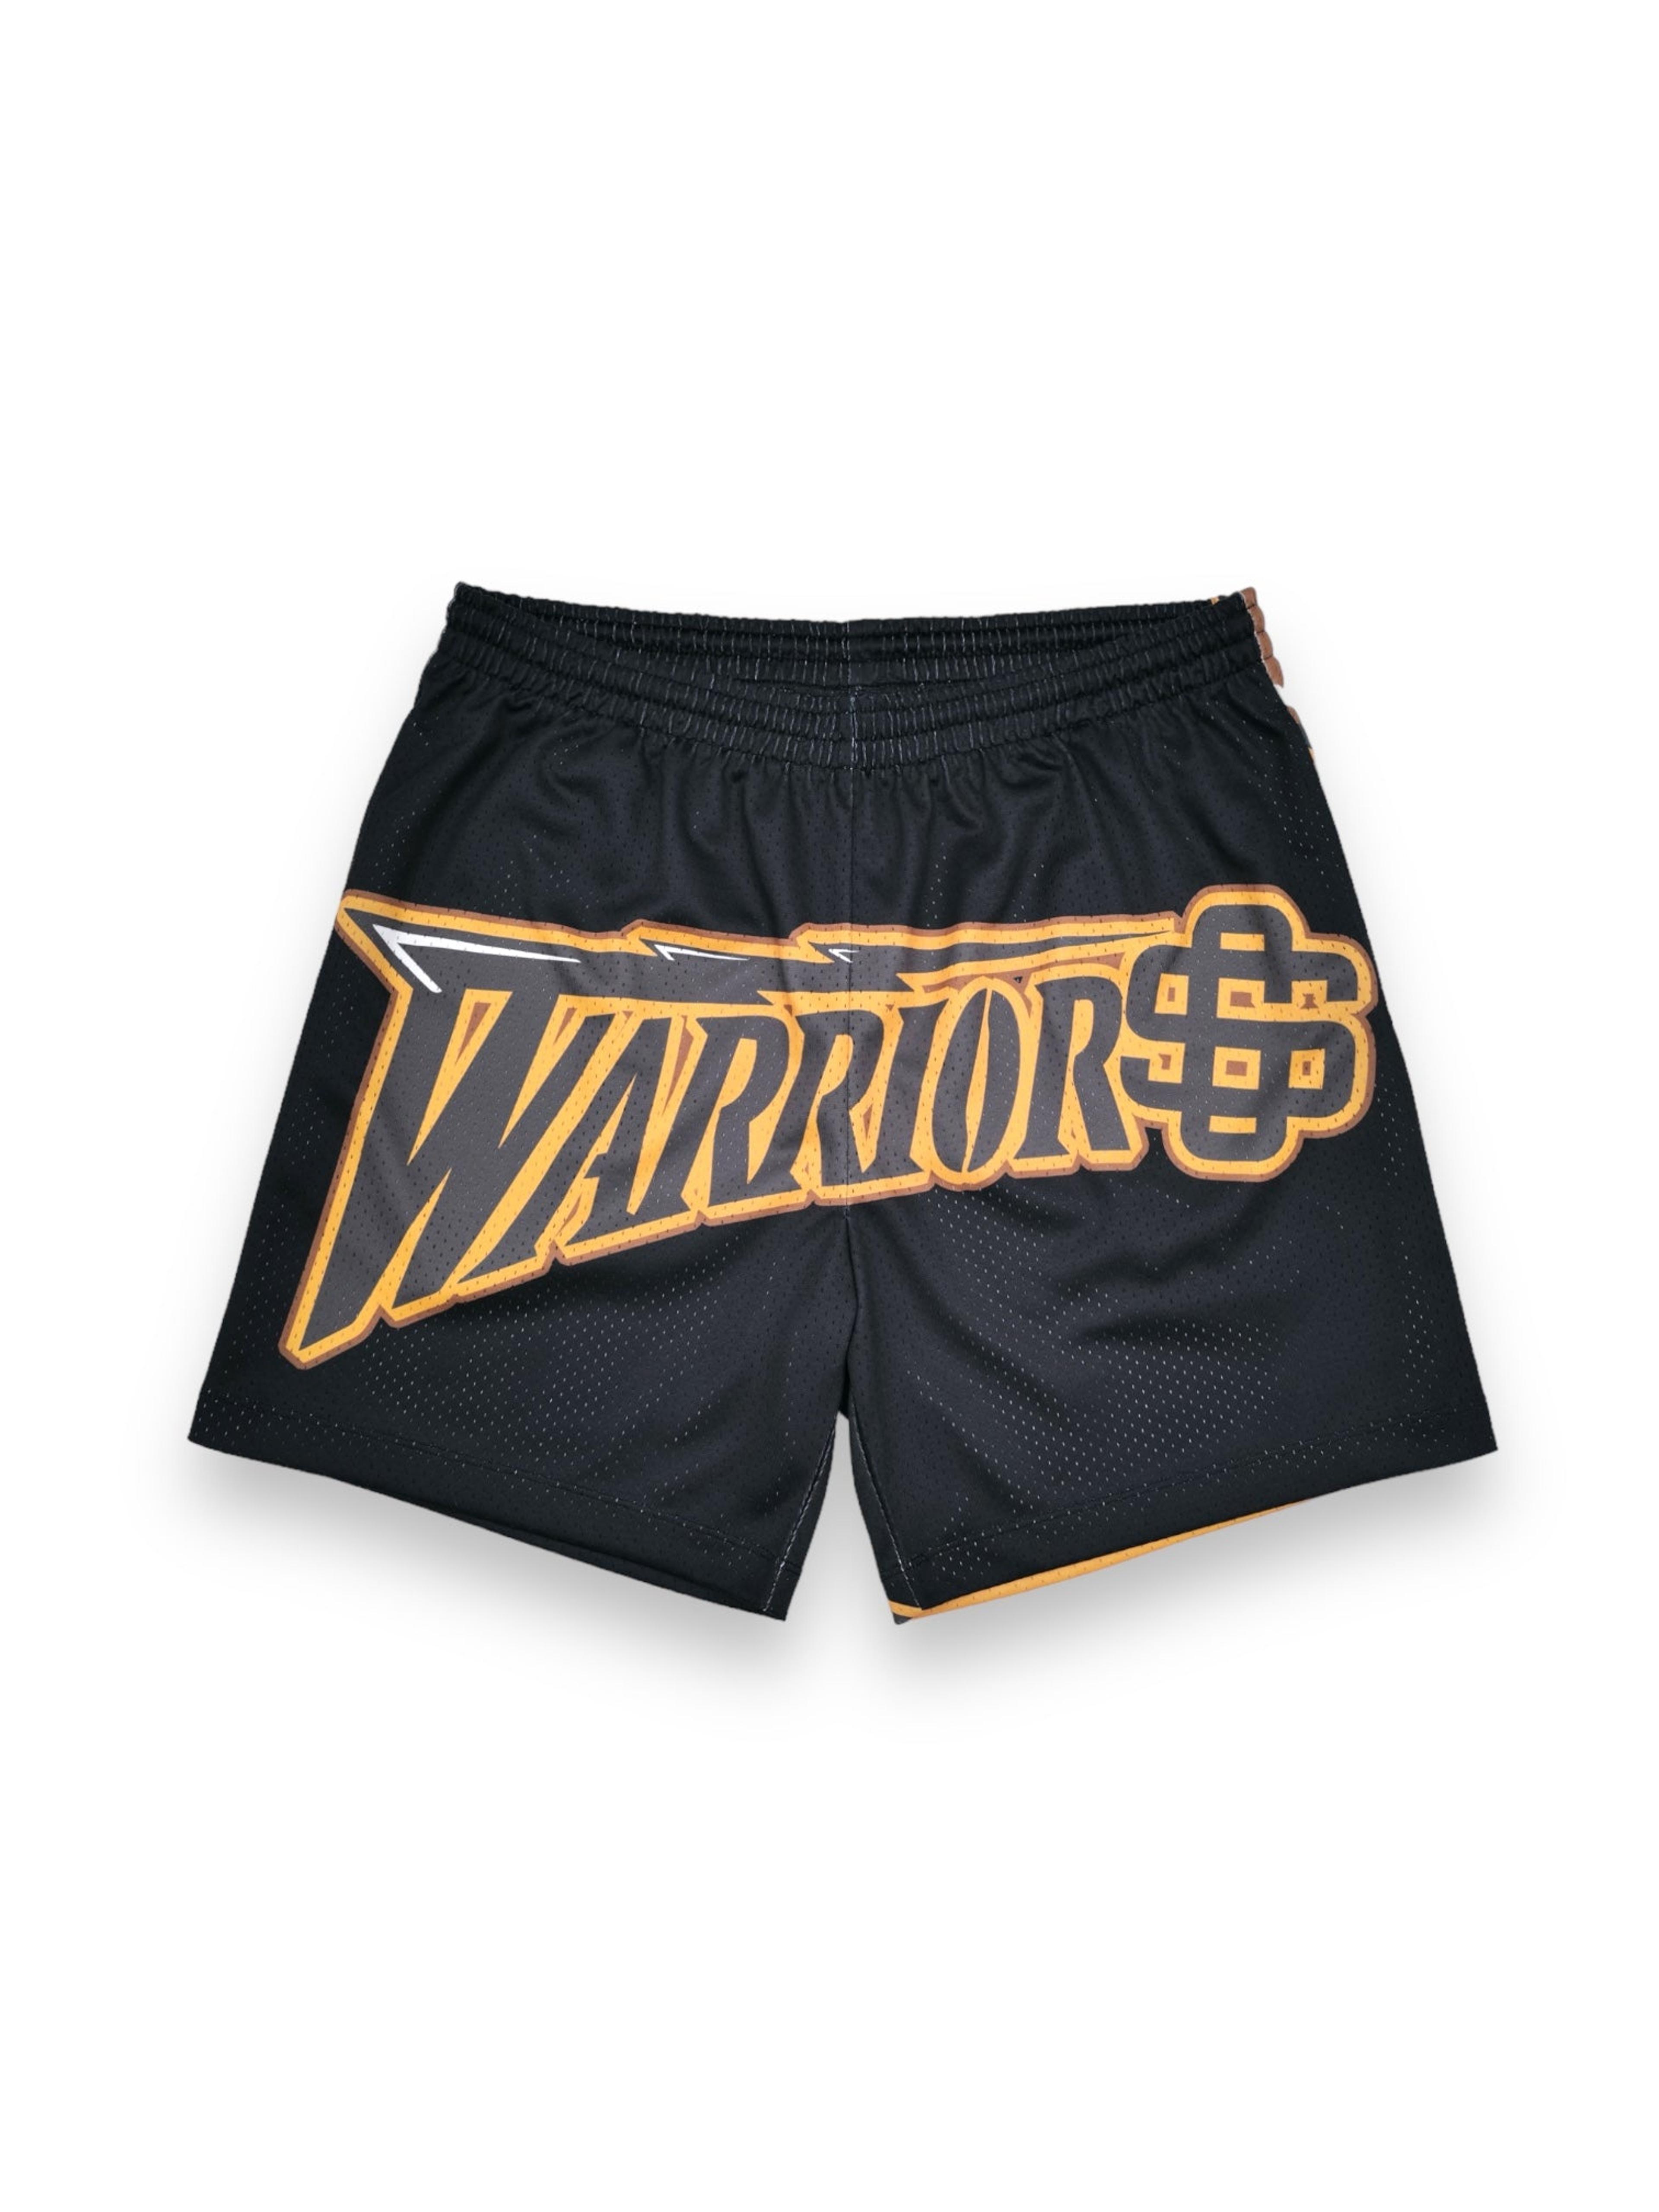 Warriors shorts (black)